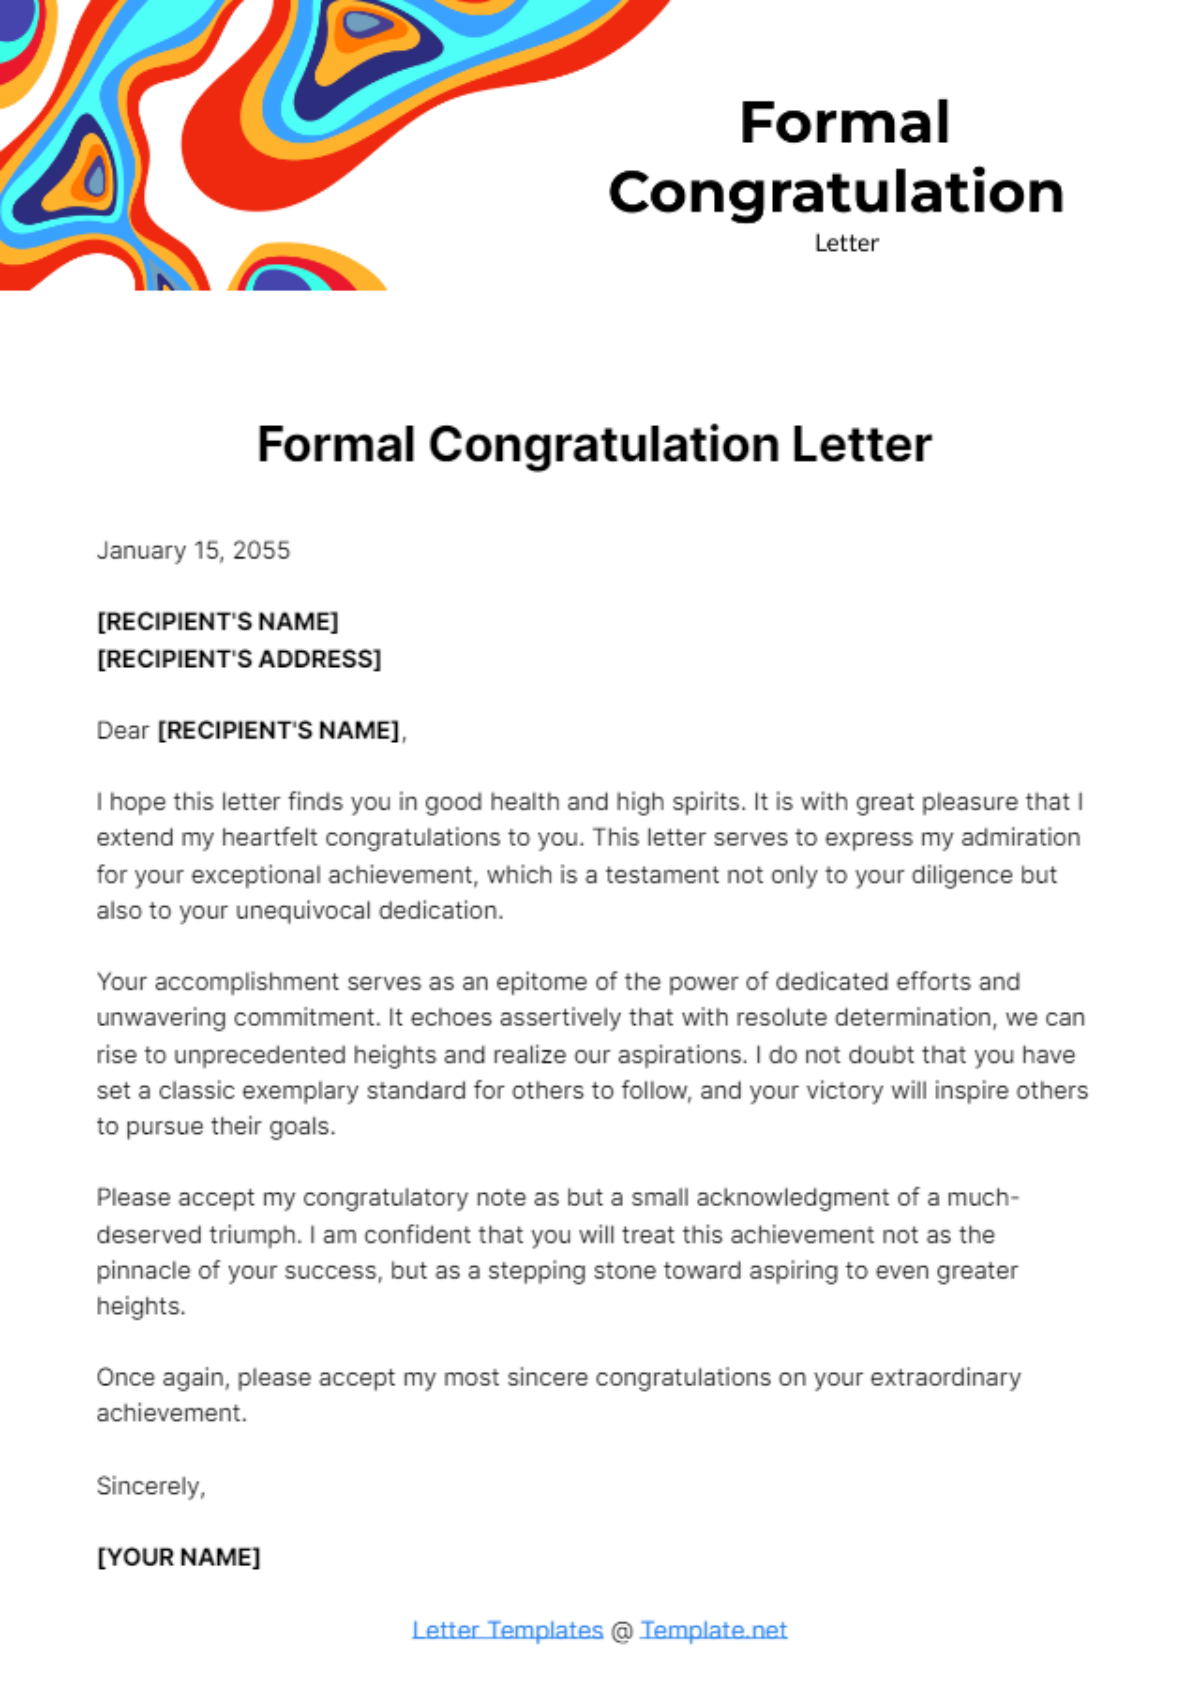 Free Formal Congratulation Letter Template